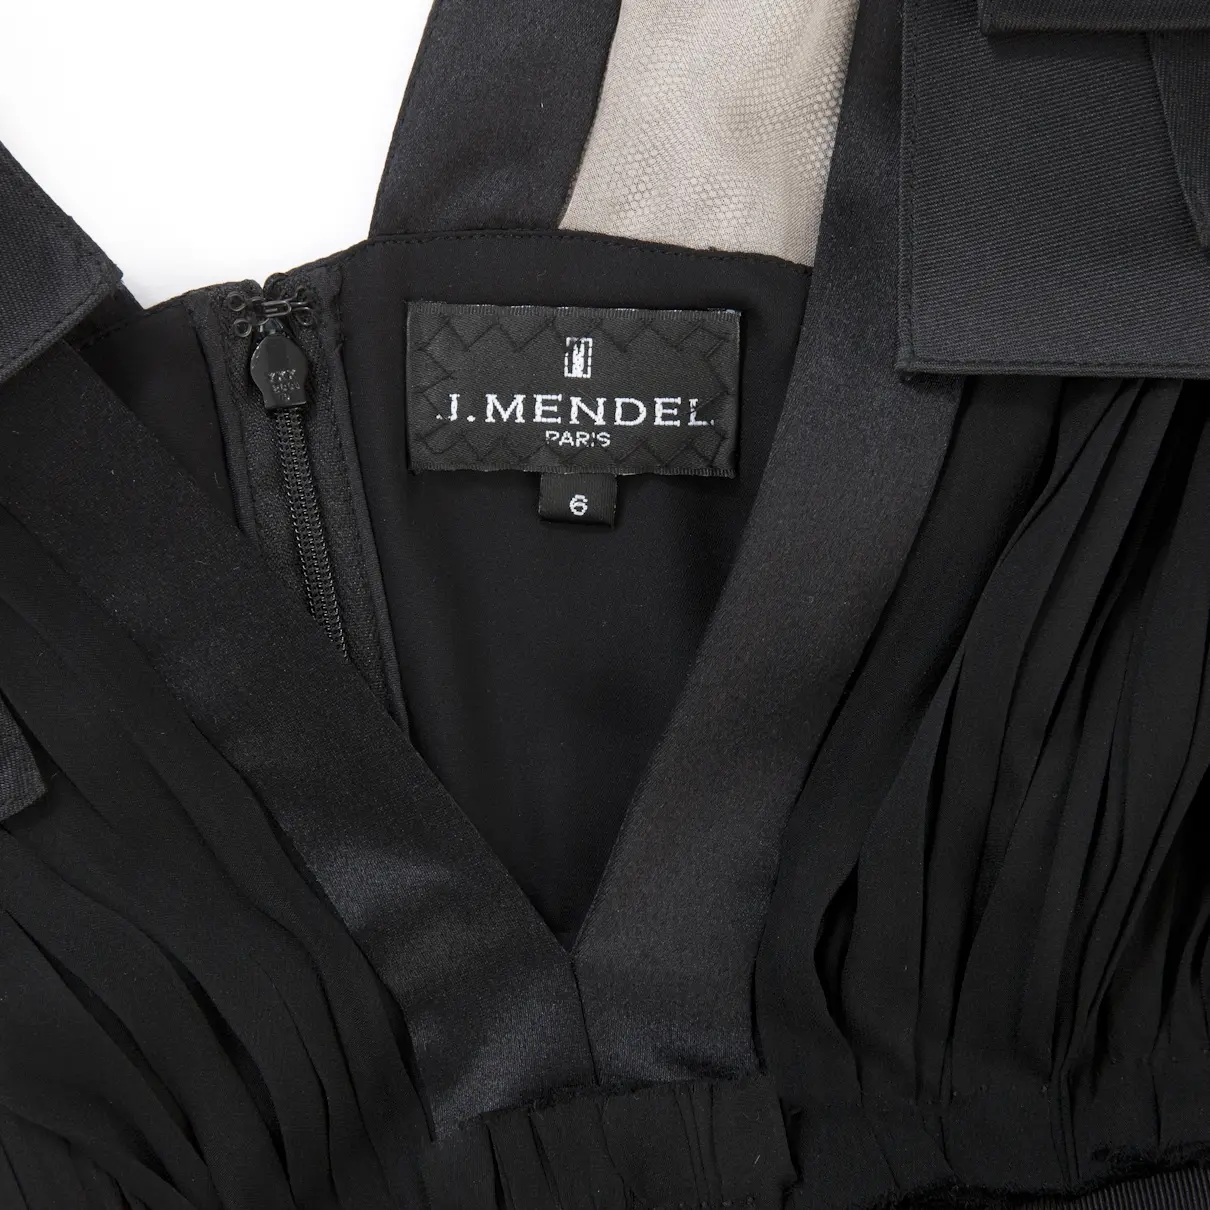 Buy J.Mendel Black Silk Dress online